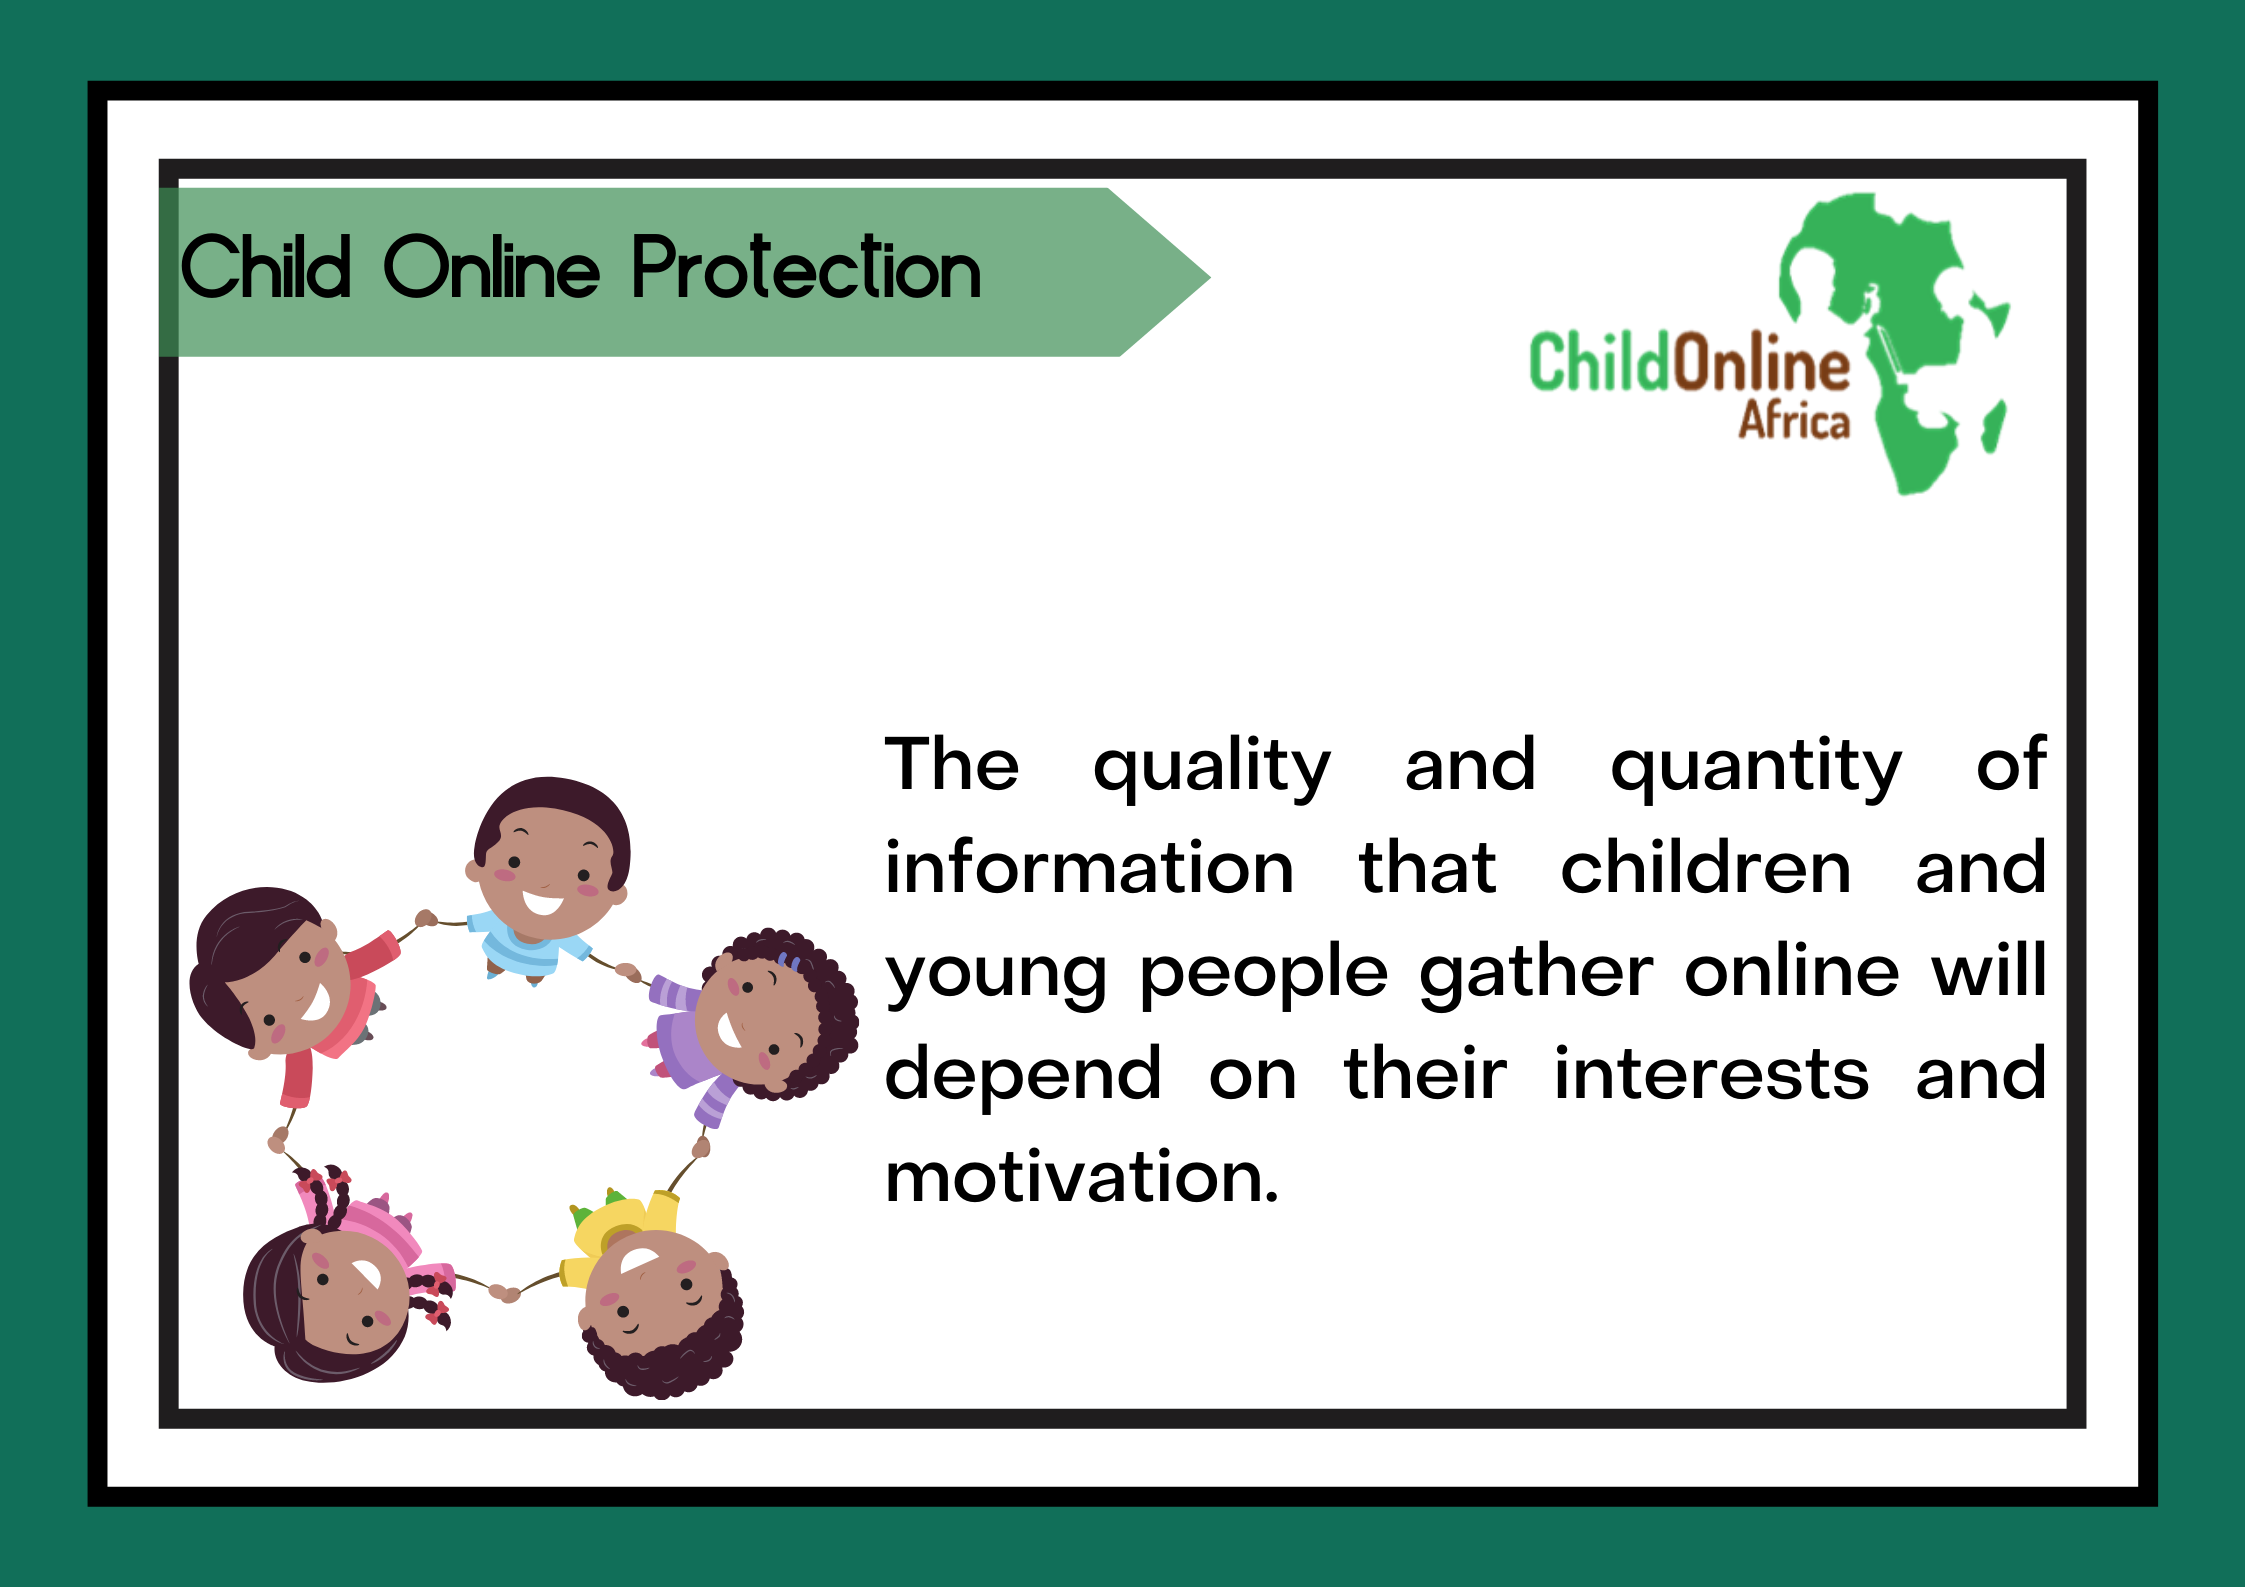 Children need quality information